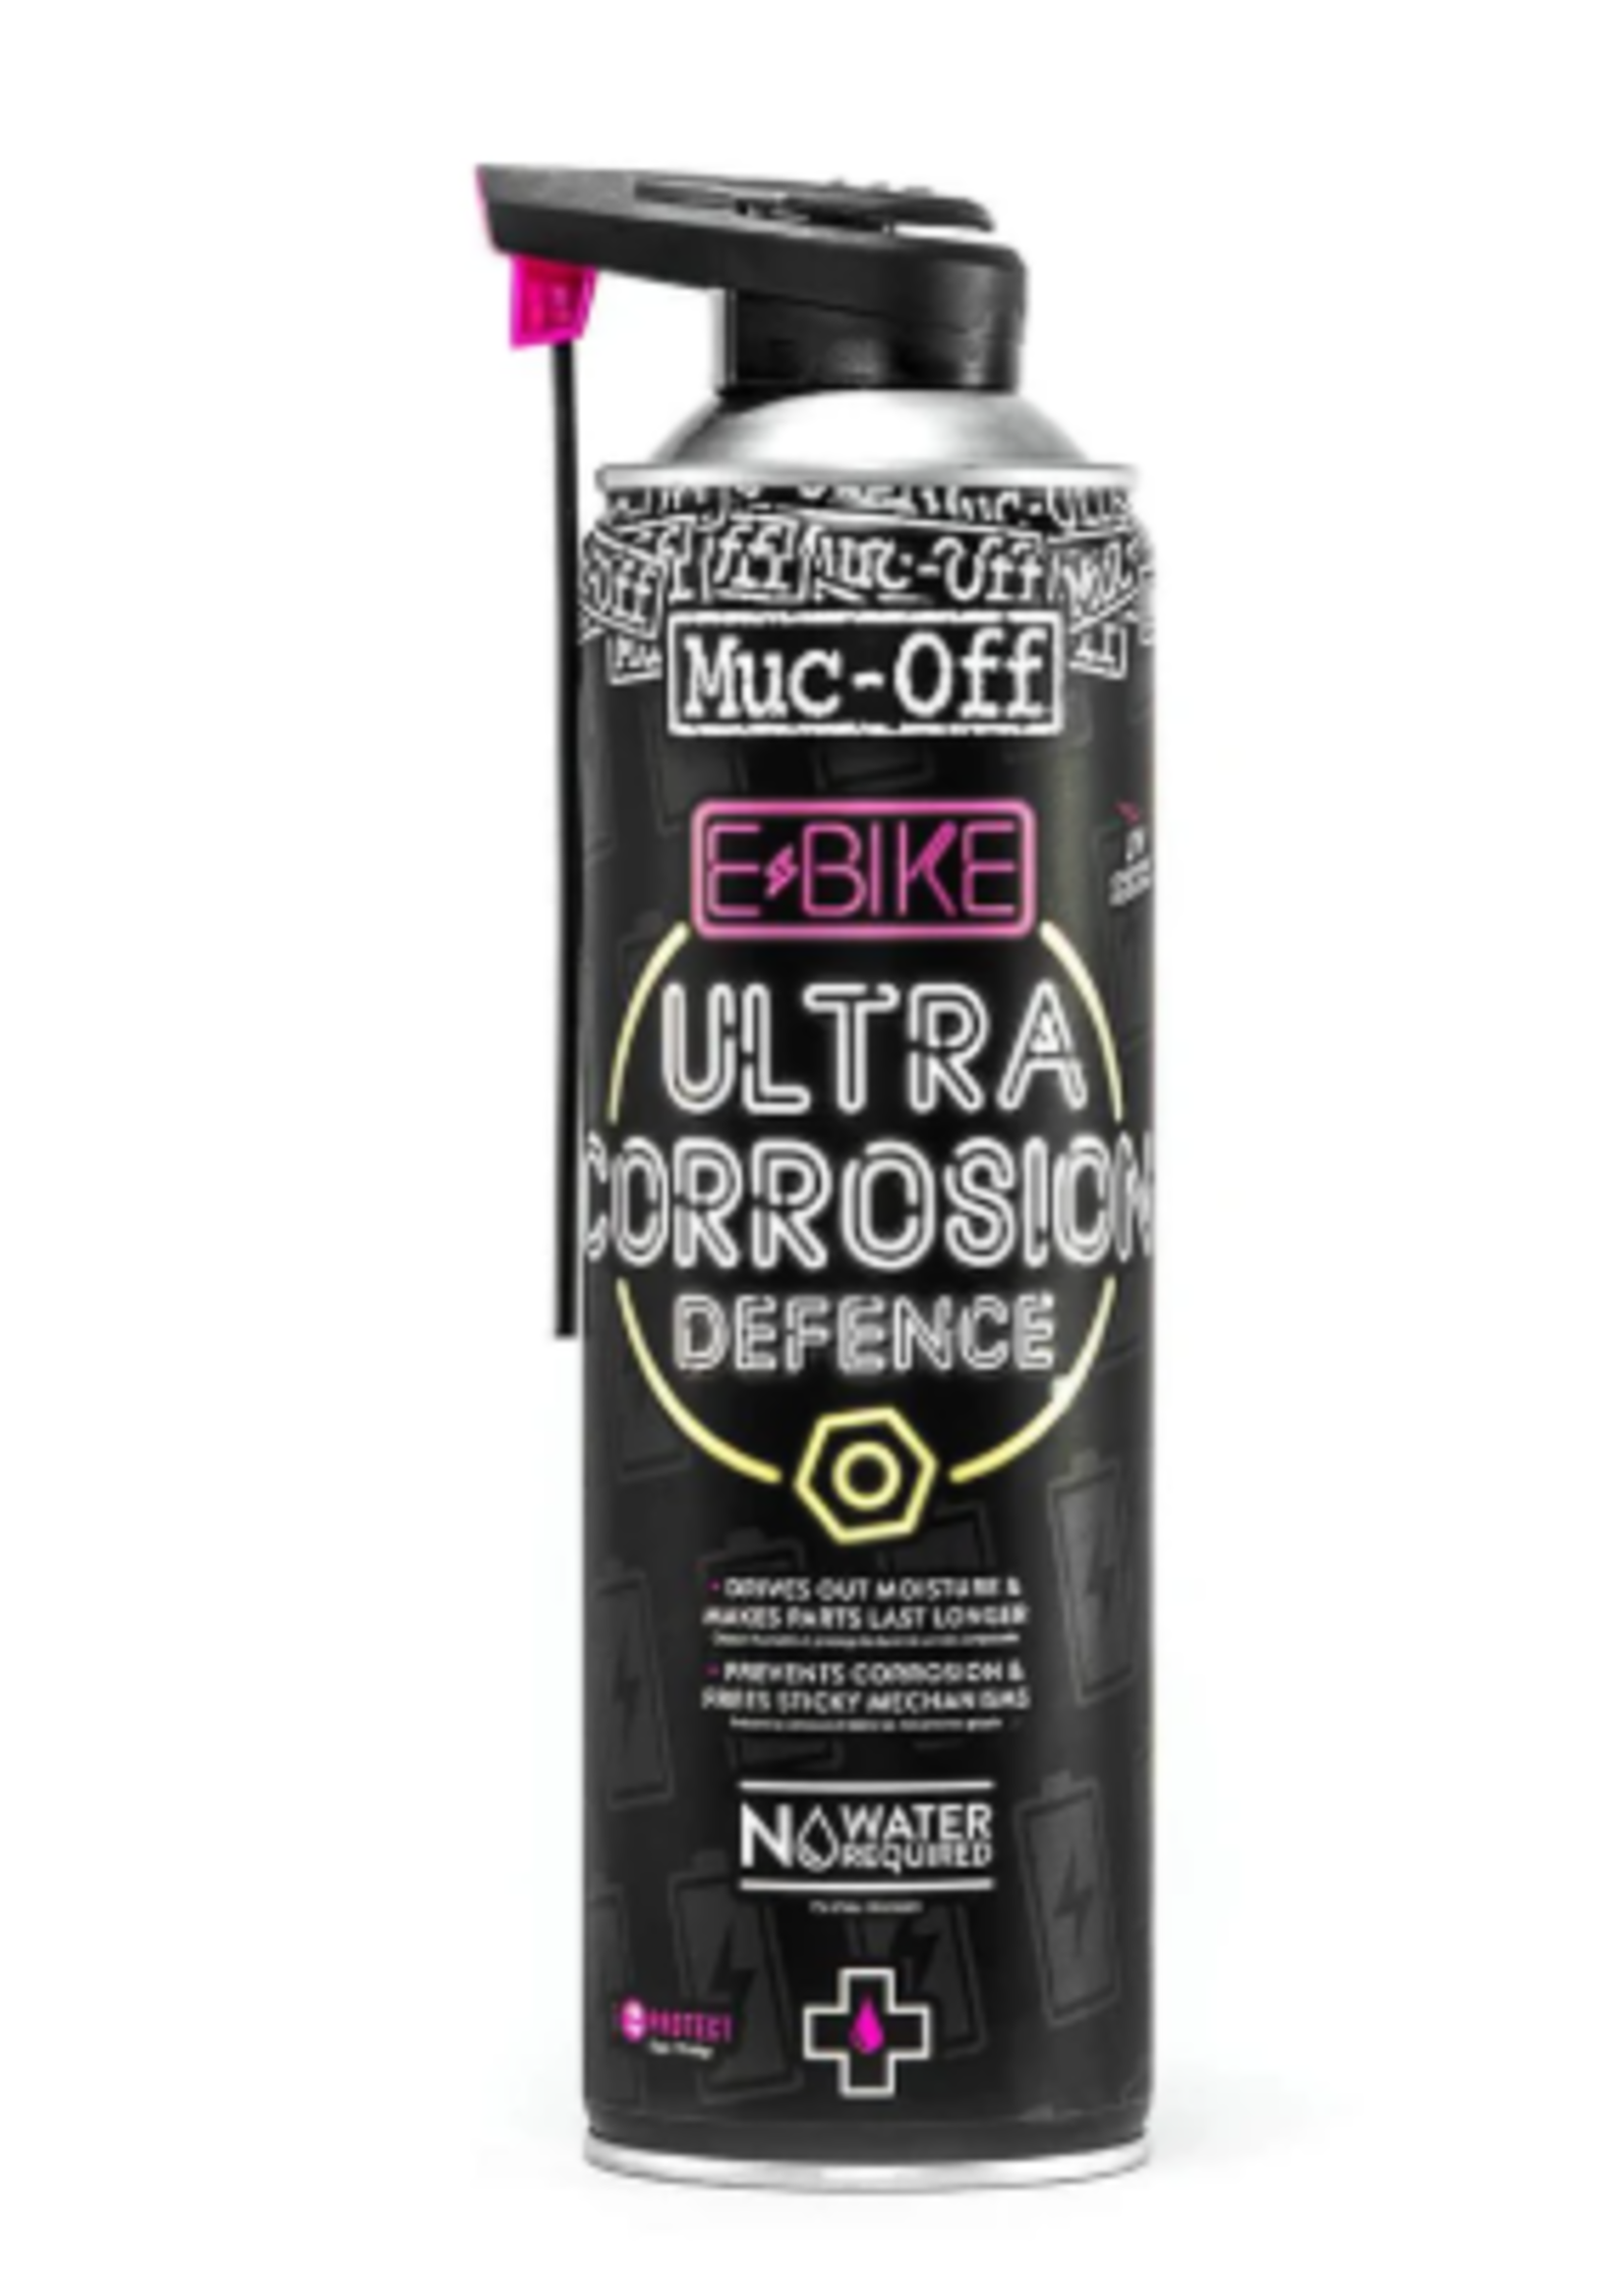 Muc-Off Muc-Off, eBike Utimate Corrosion Defense, 485ml